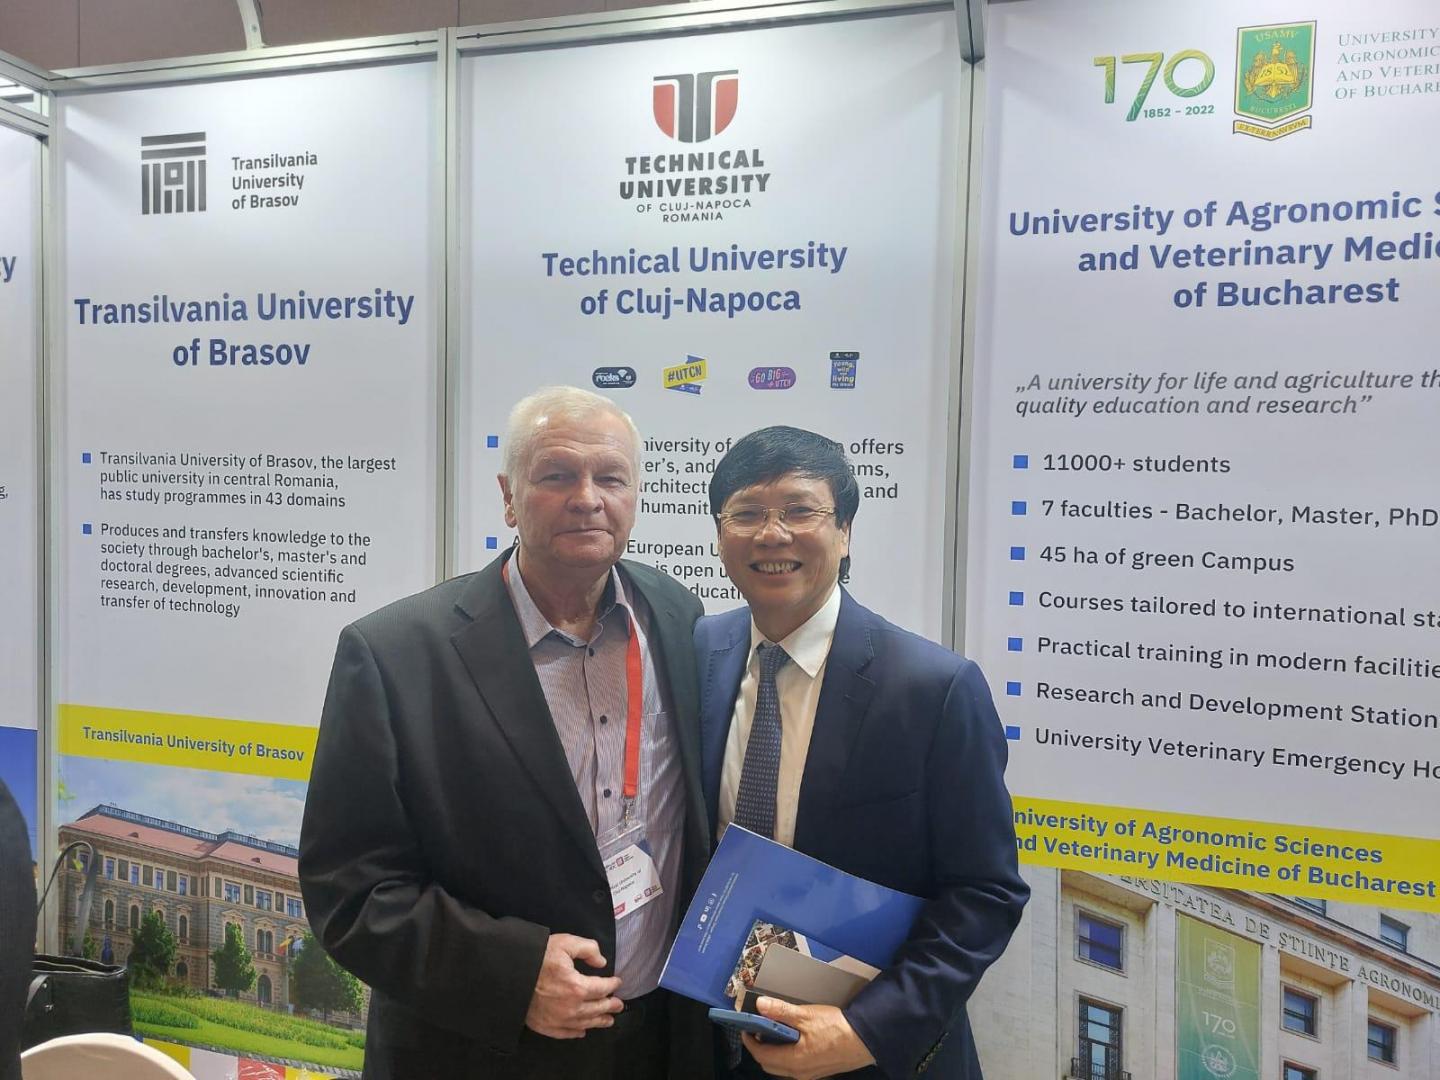 UTCN a participat la Târgul Educațional BMI Vietnam Education Fair, un eveniment Times Higher Education